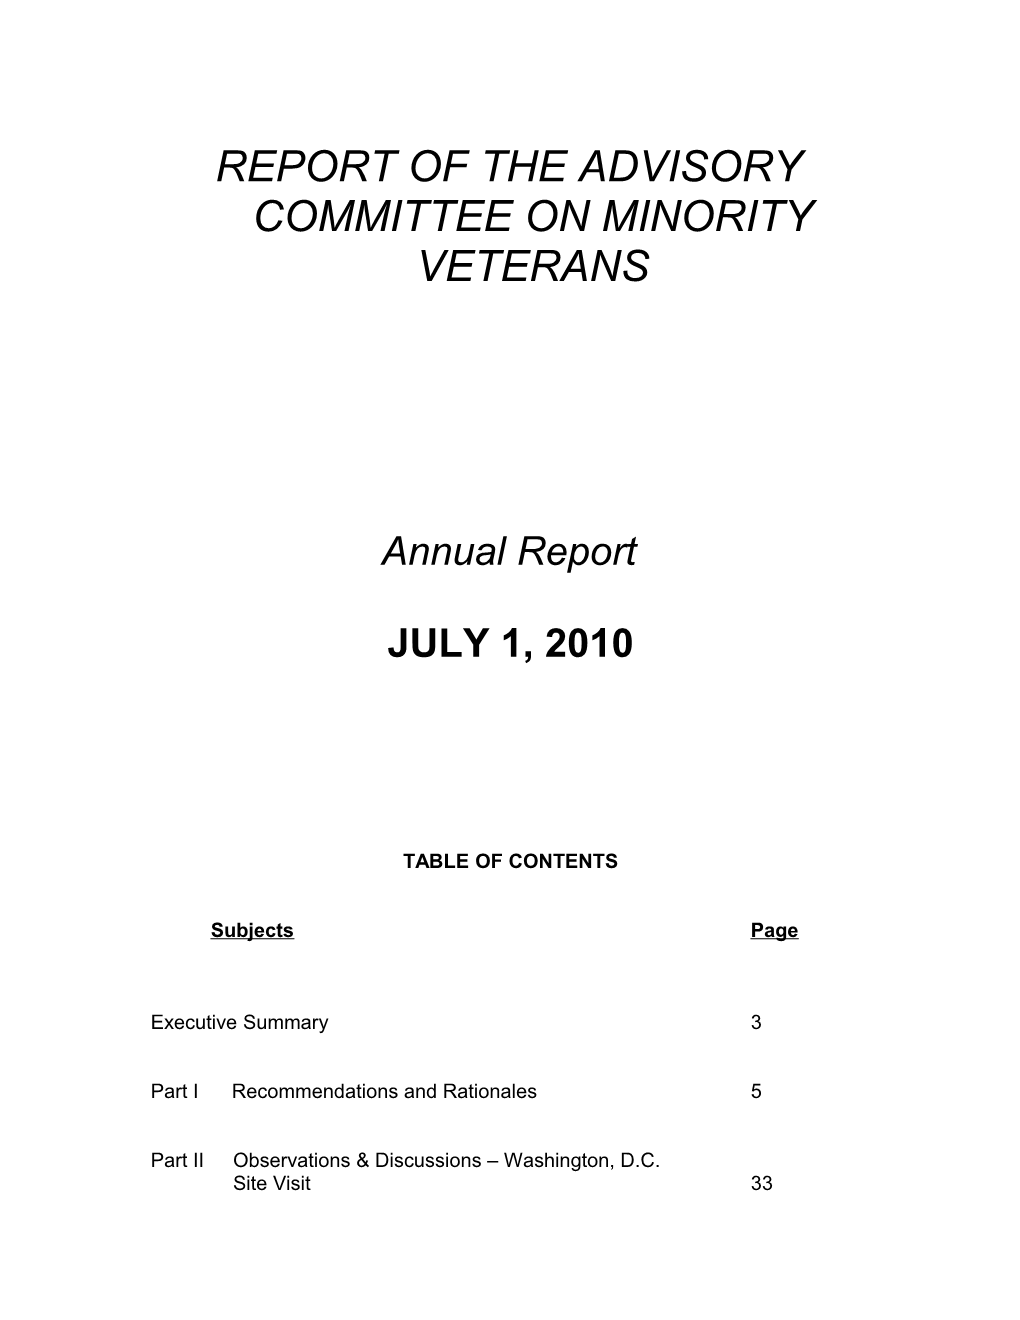 Report of the Advisory Committee on Minority Veterans